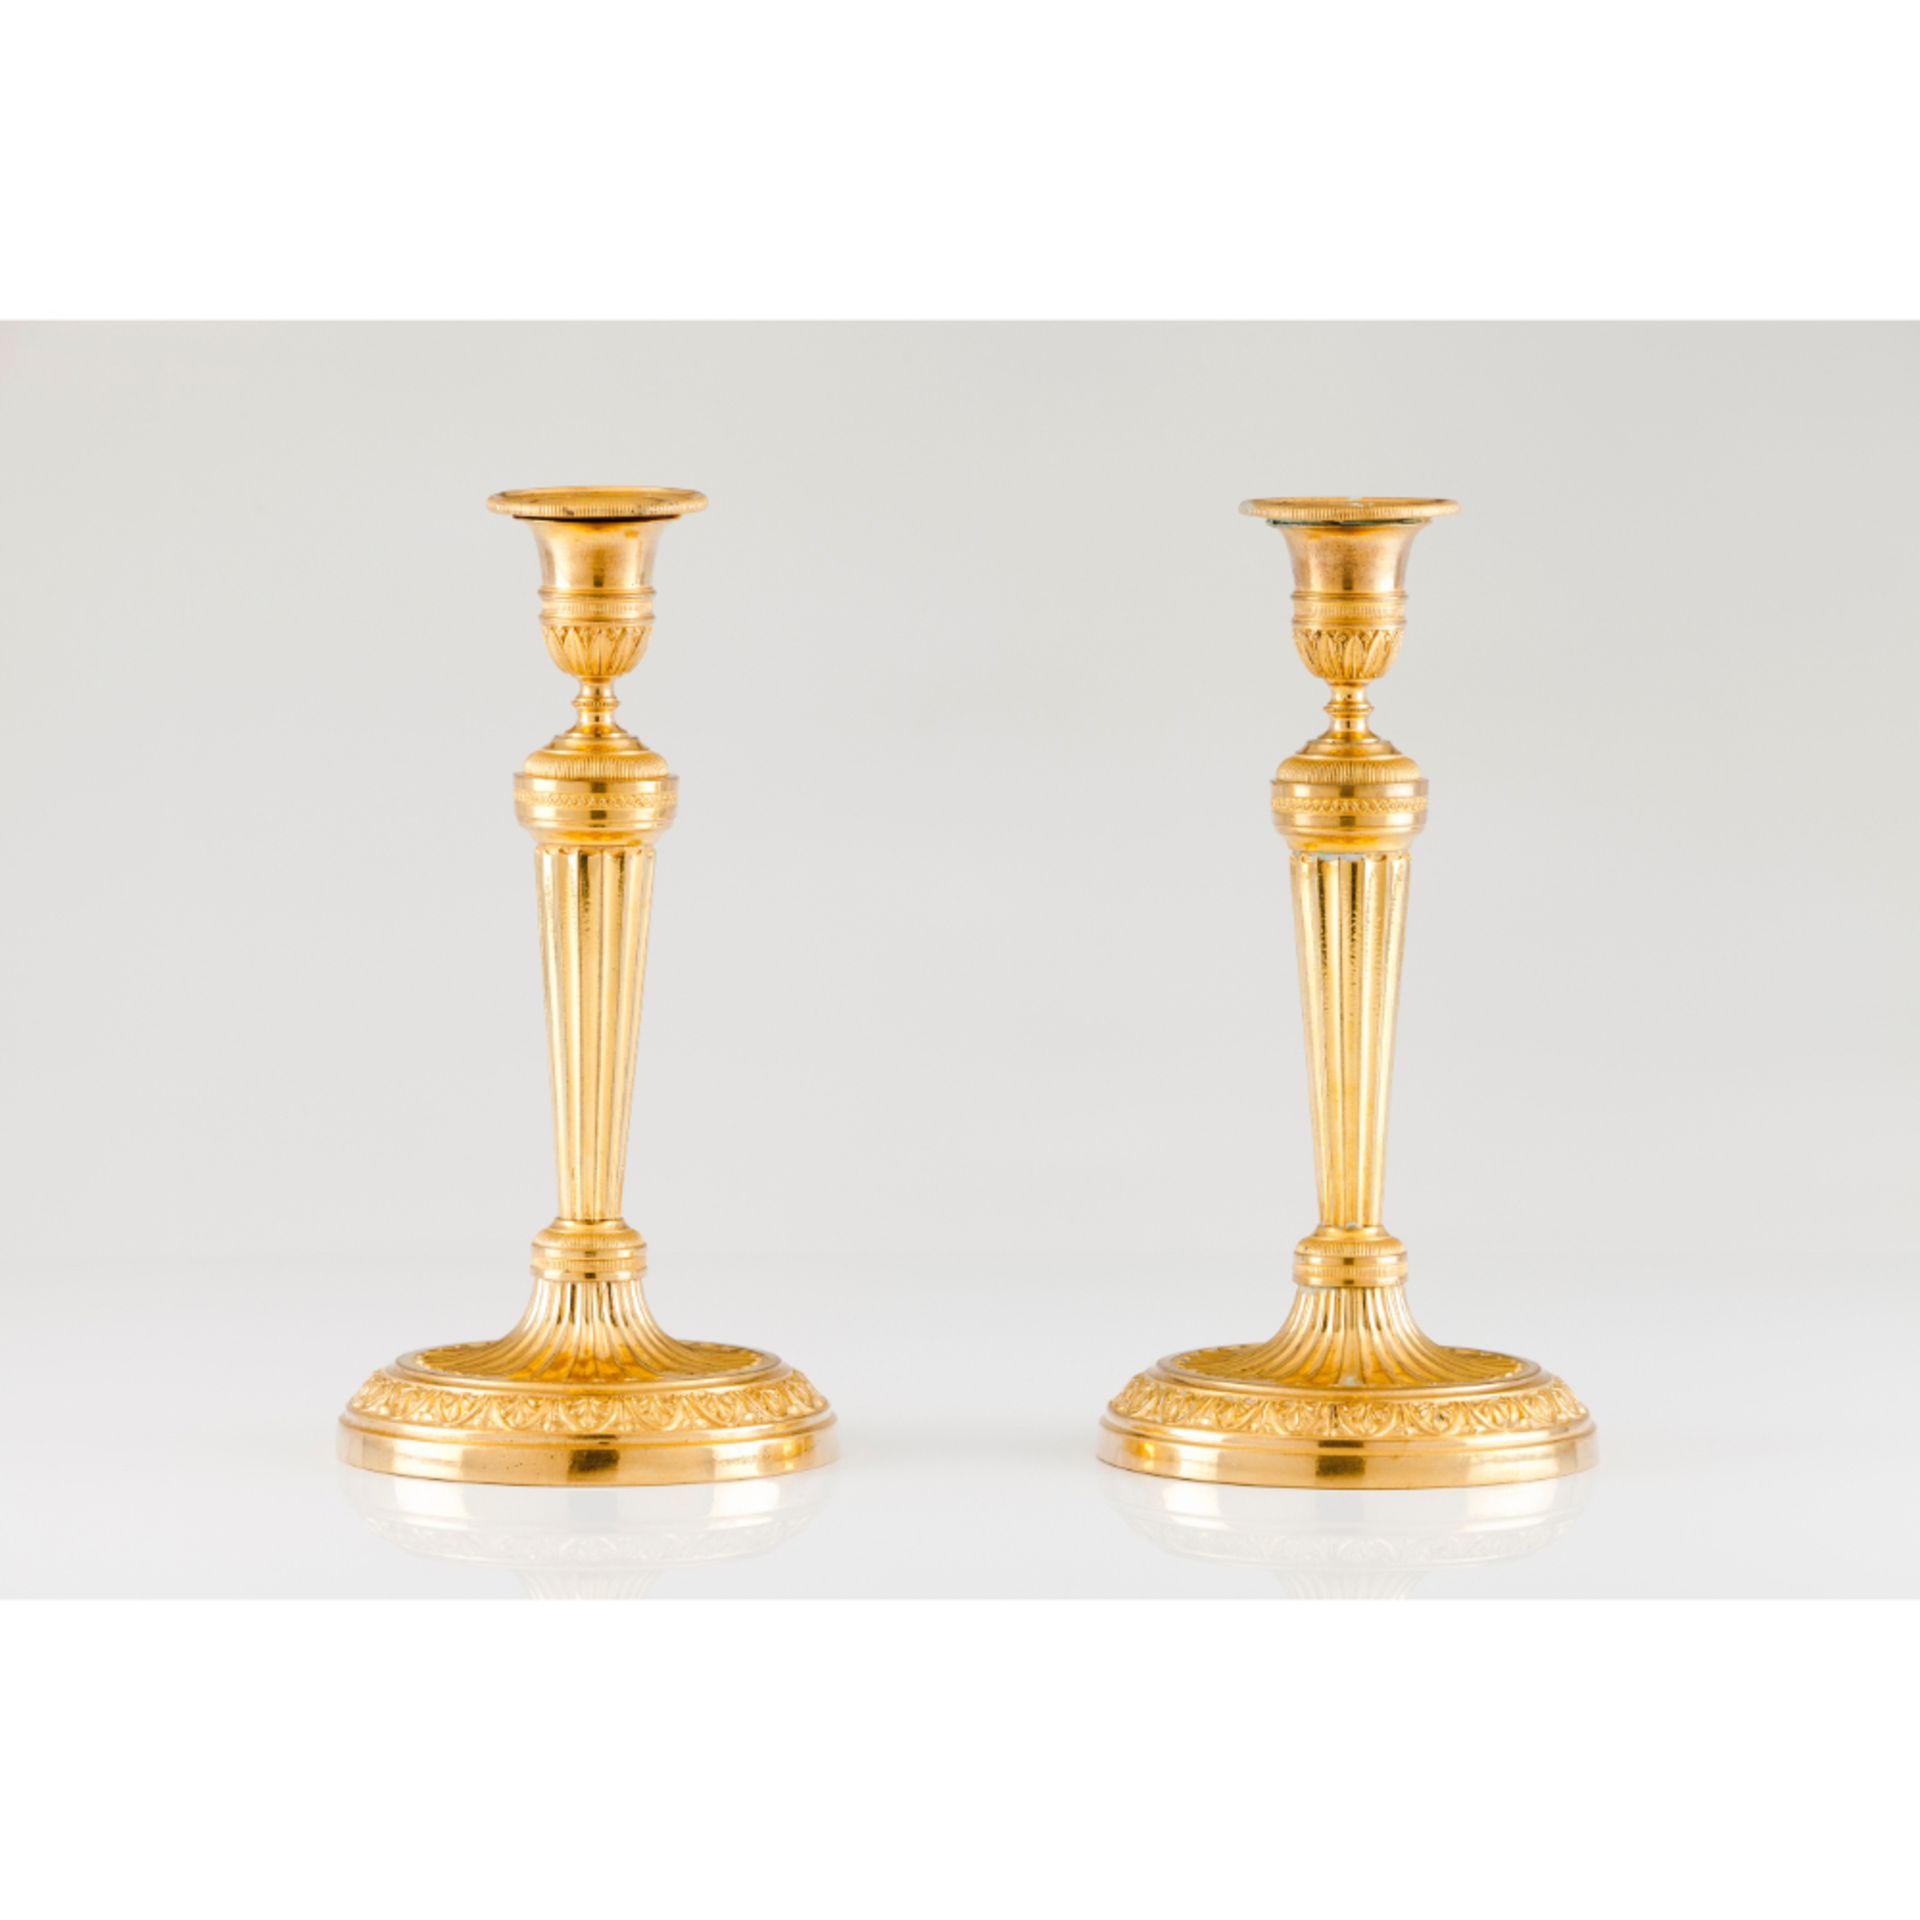 A pair of Louis XVI large candlesticks